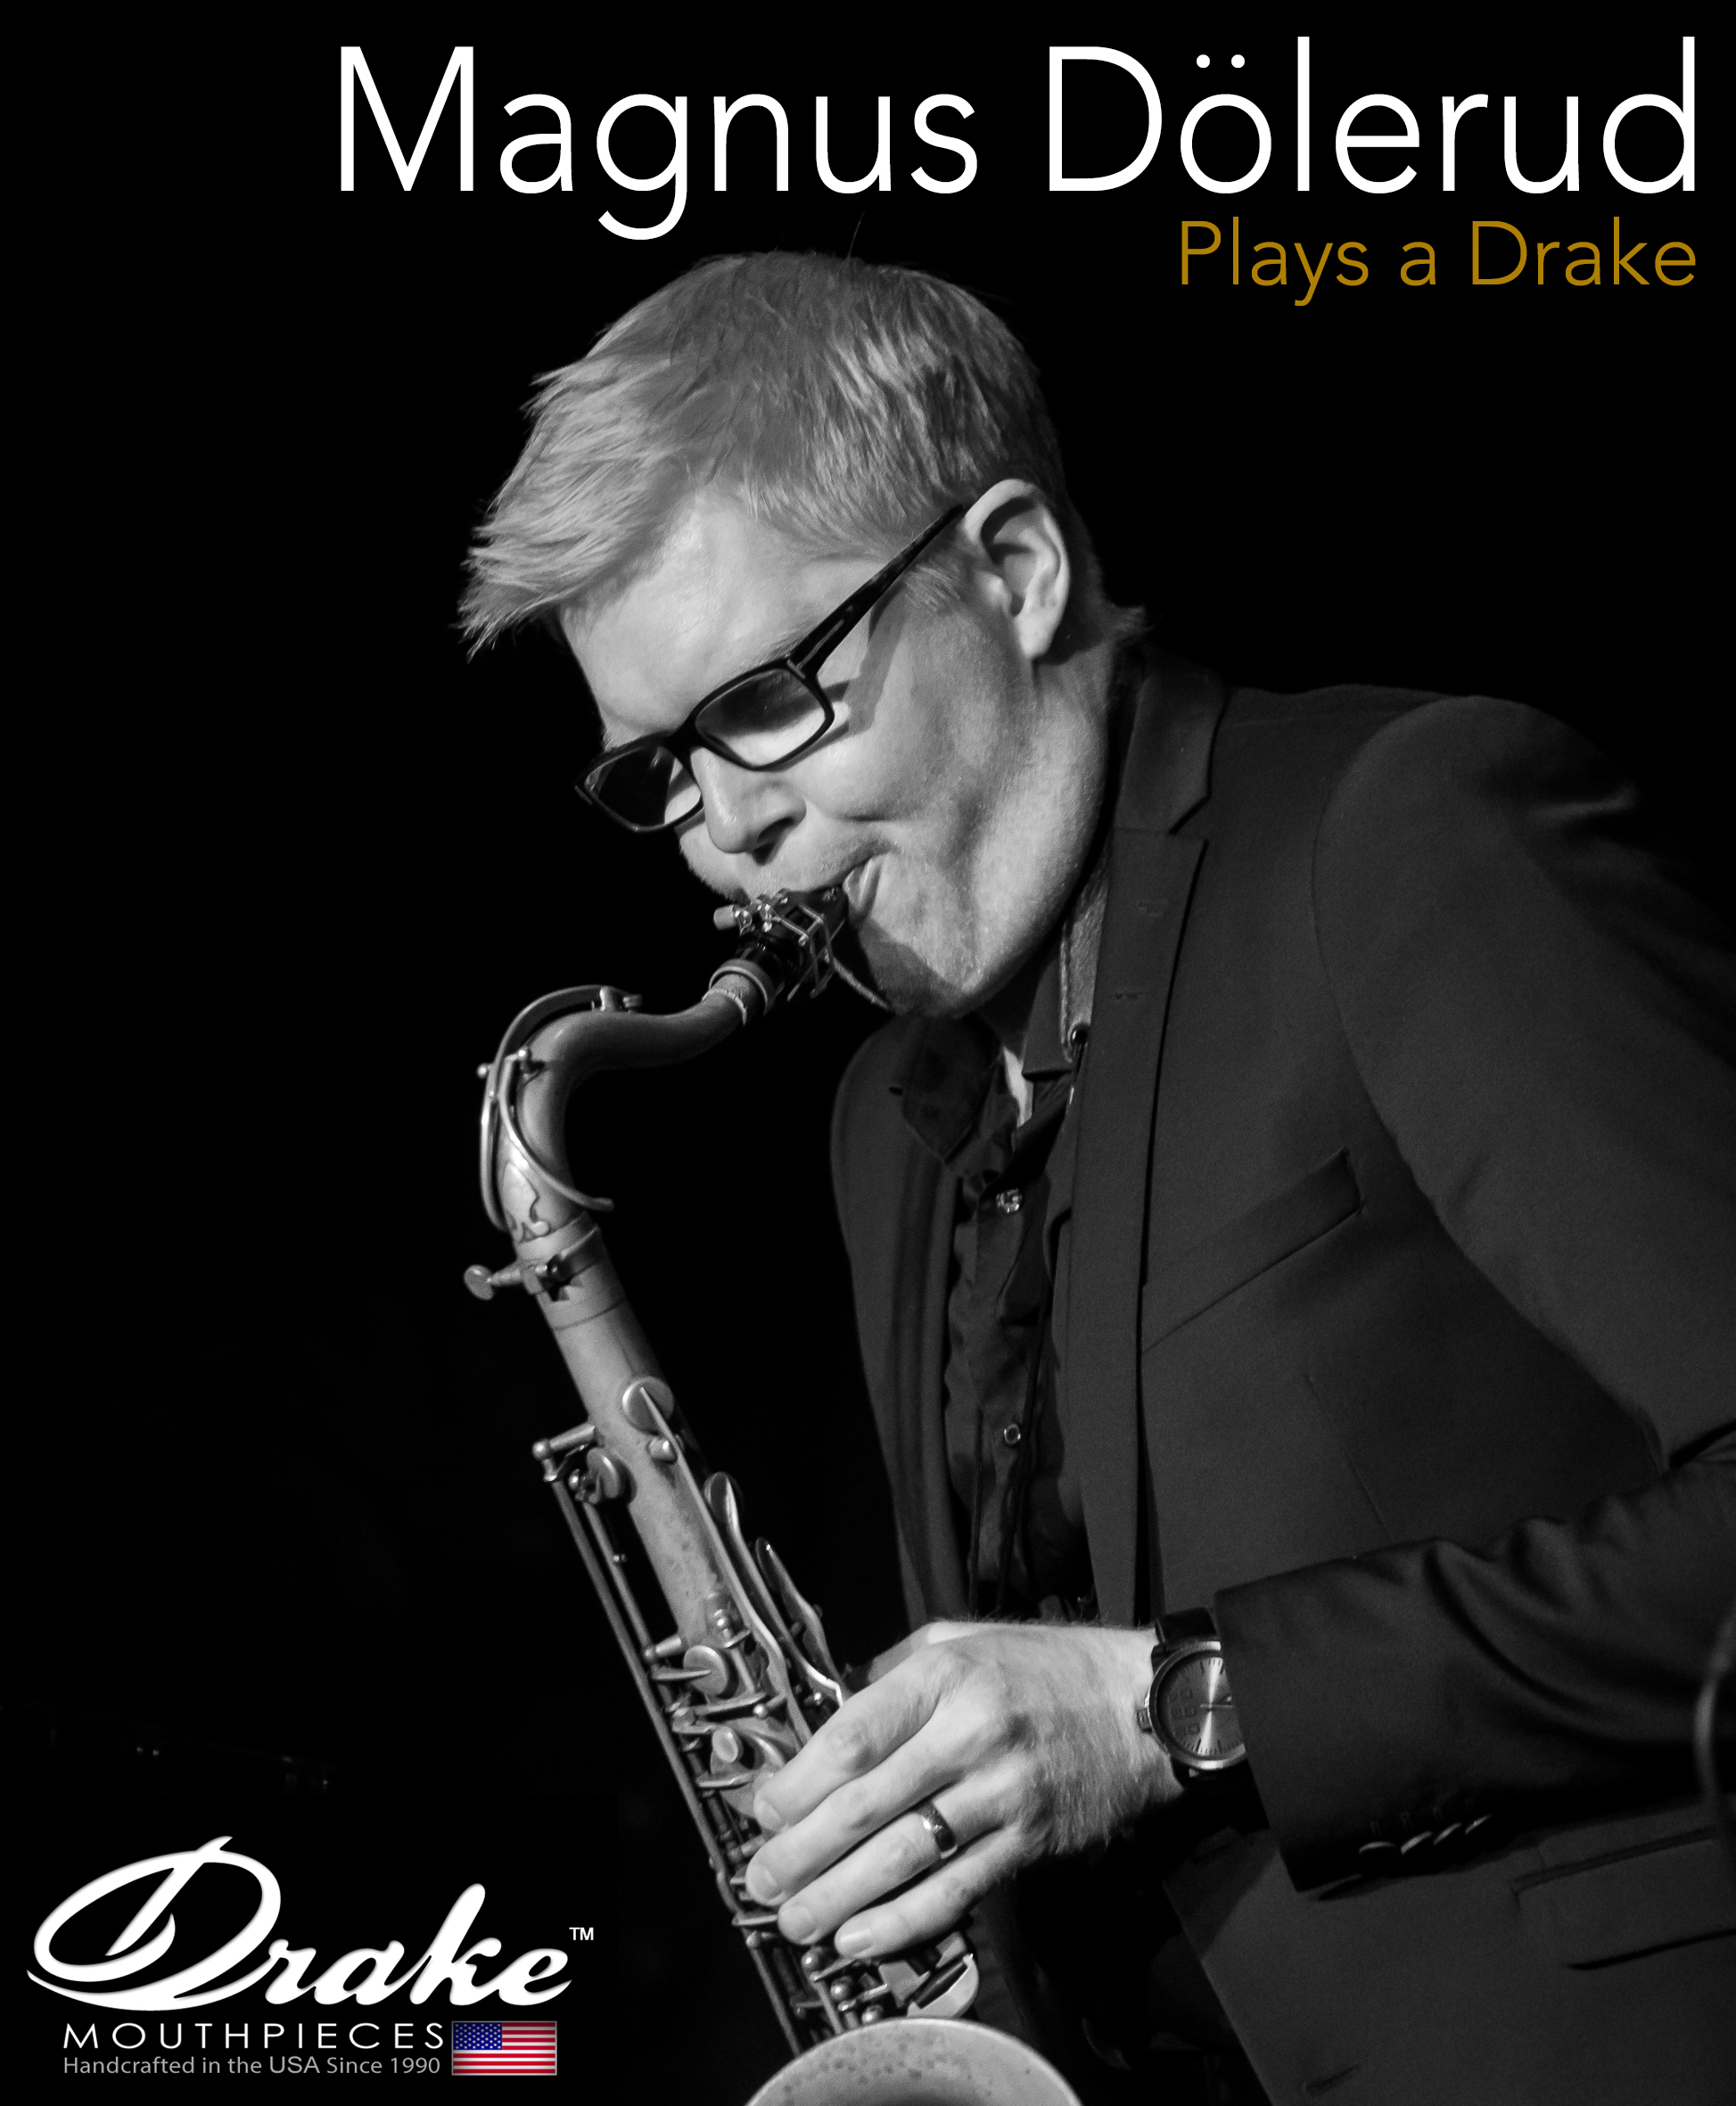 Drake Saxophone Mouthpiece Artist Magnus Dolerud